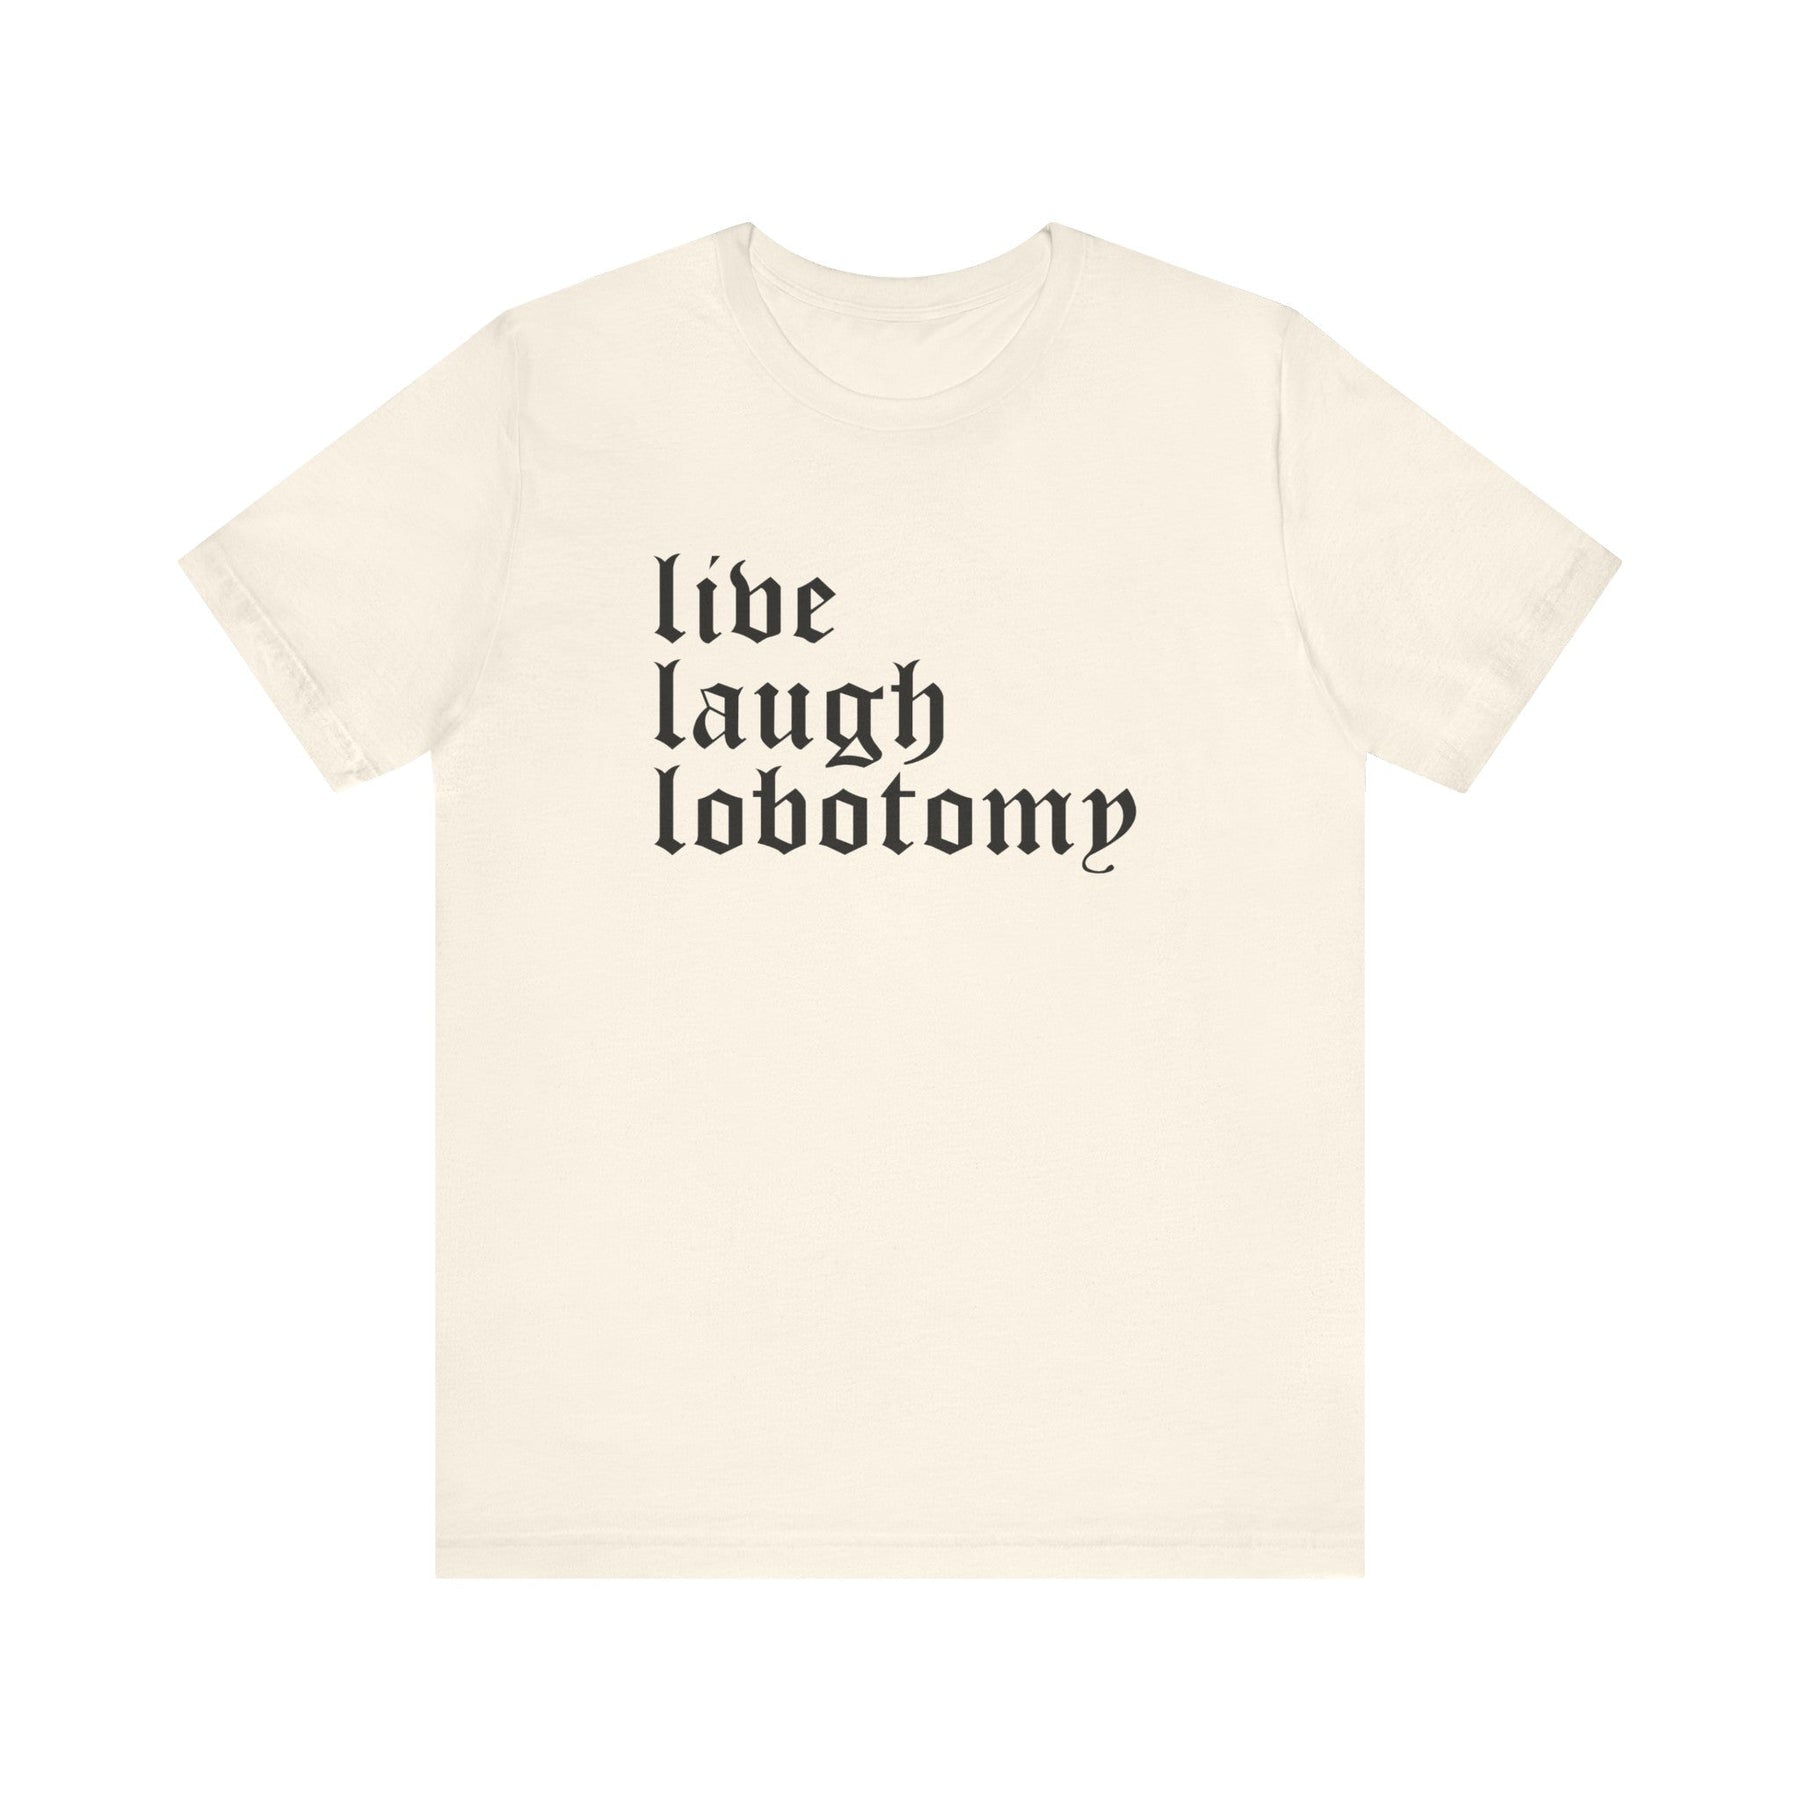 Live Laugh Lobotomy Short Sleeve Tee - Goth Cloth Co.T - Shirt12963226040137299587